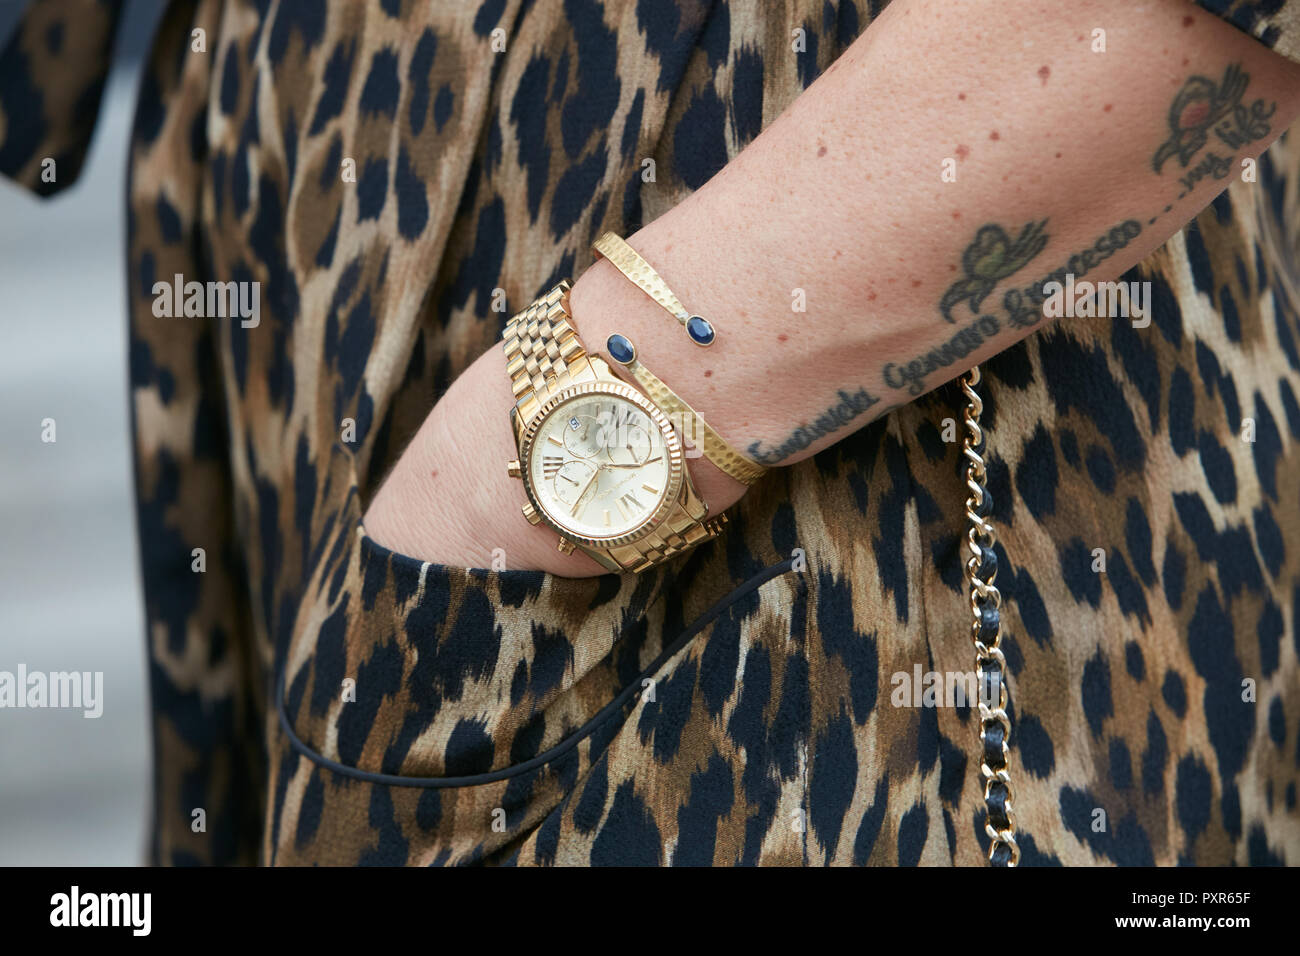 michael kors watch leopard print